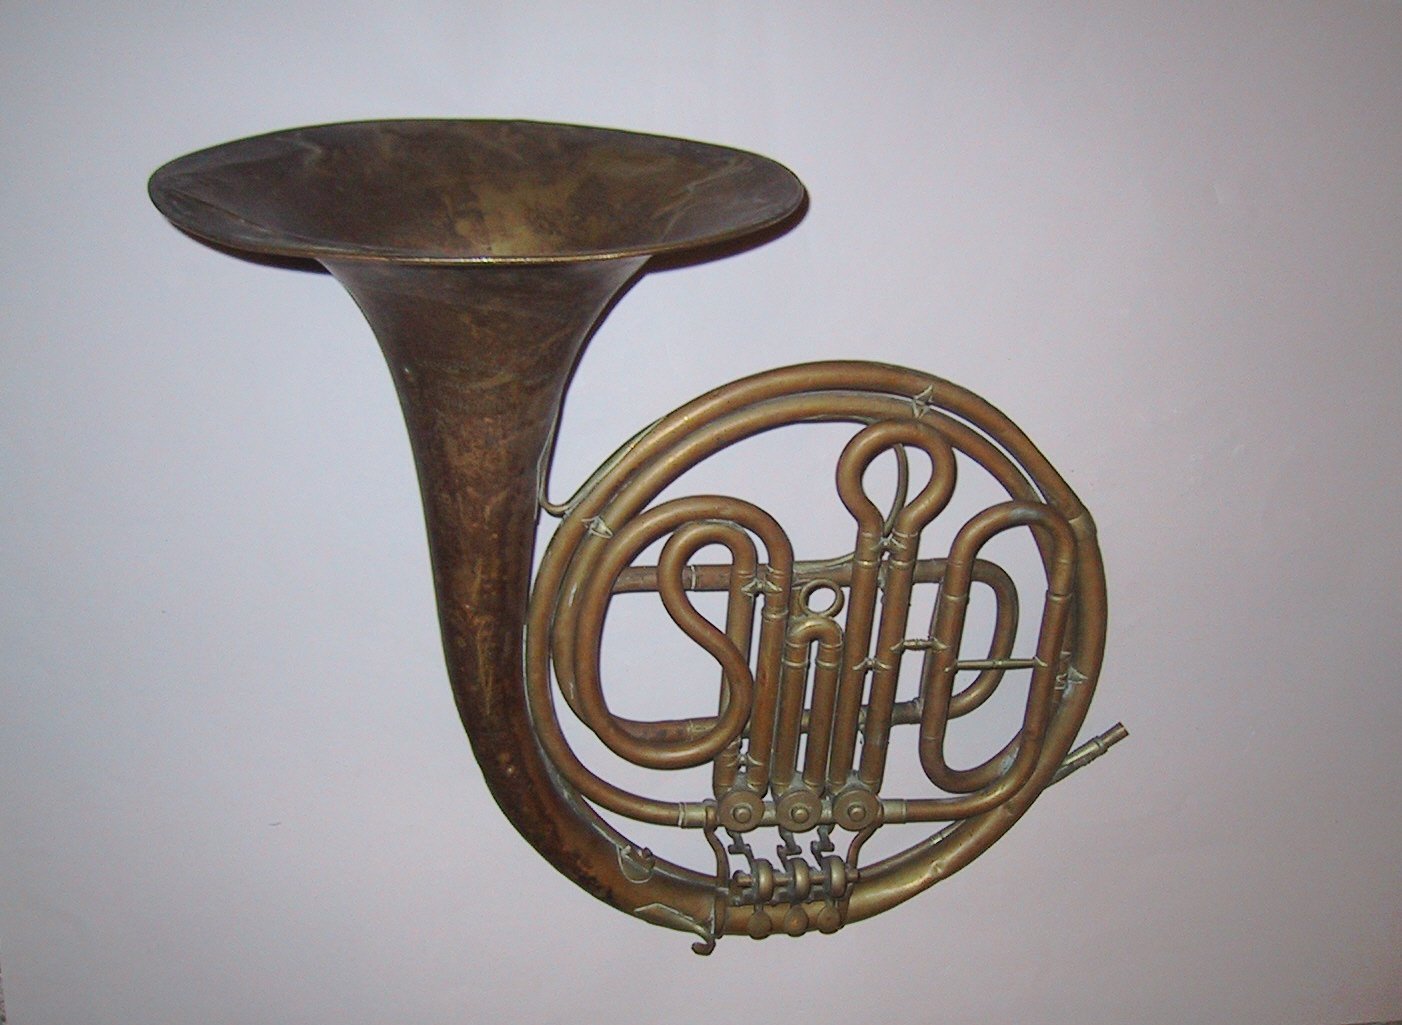 MIB_0141 Horn in F (Geschichts- und Heimatverein Eglofs e.V. CC BY-NC-SA)